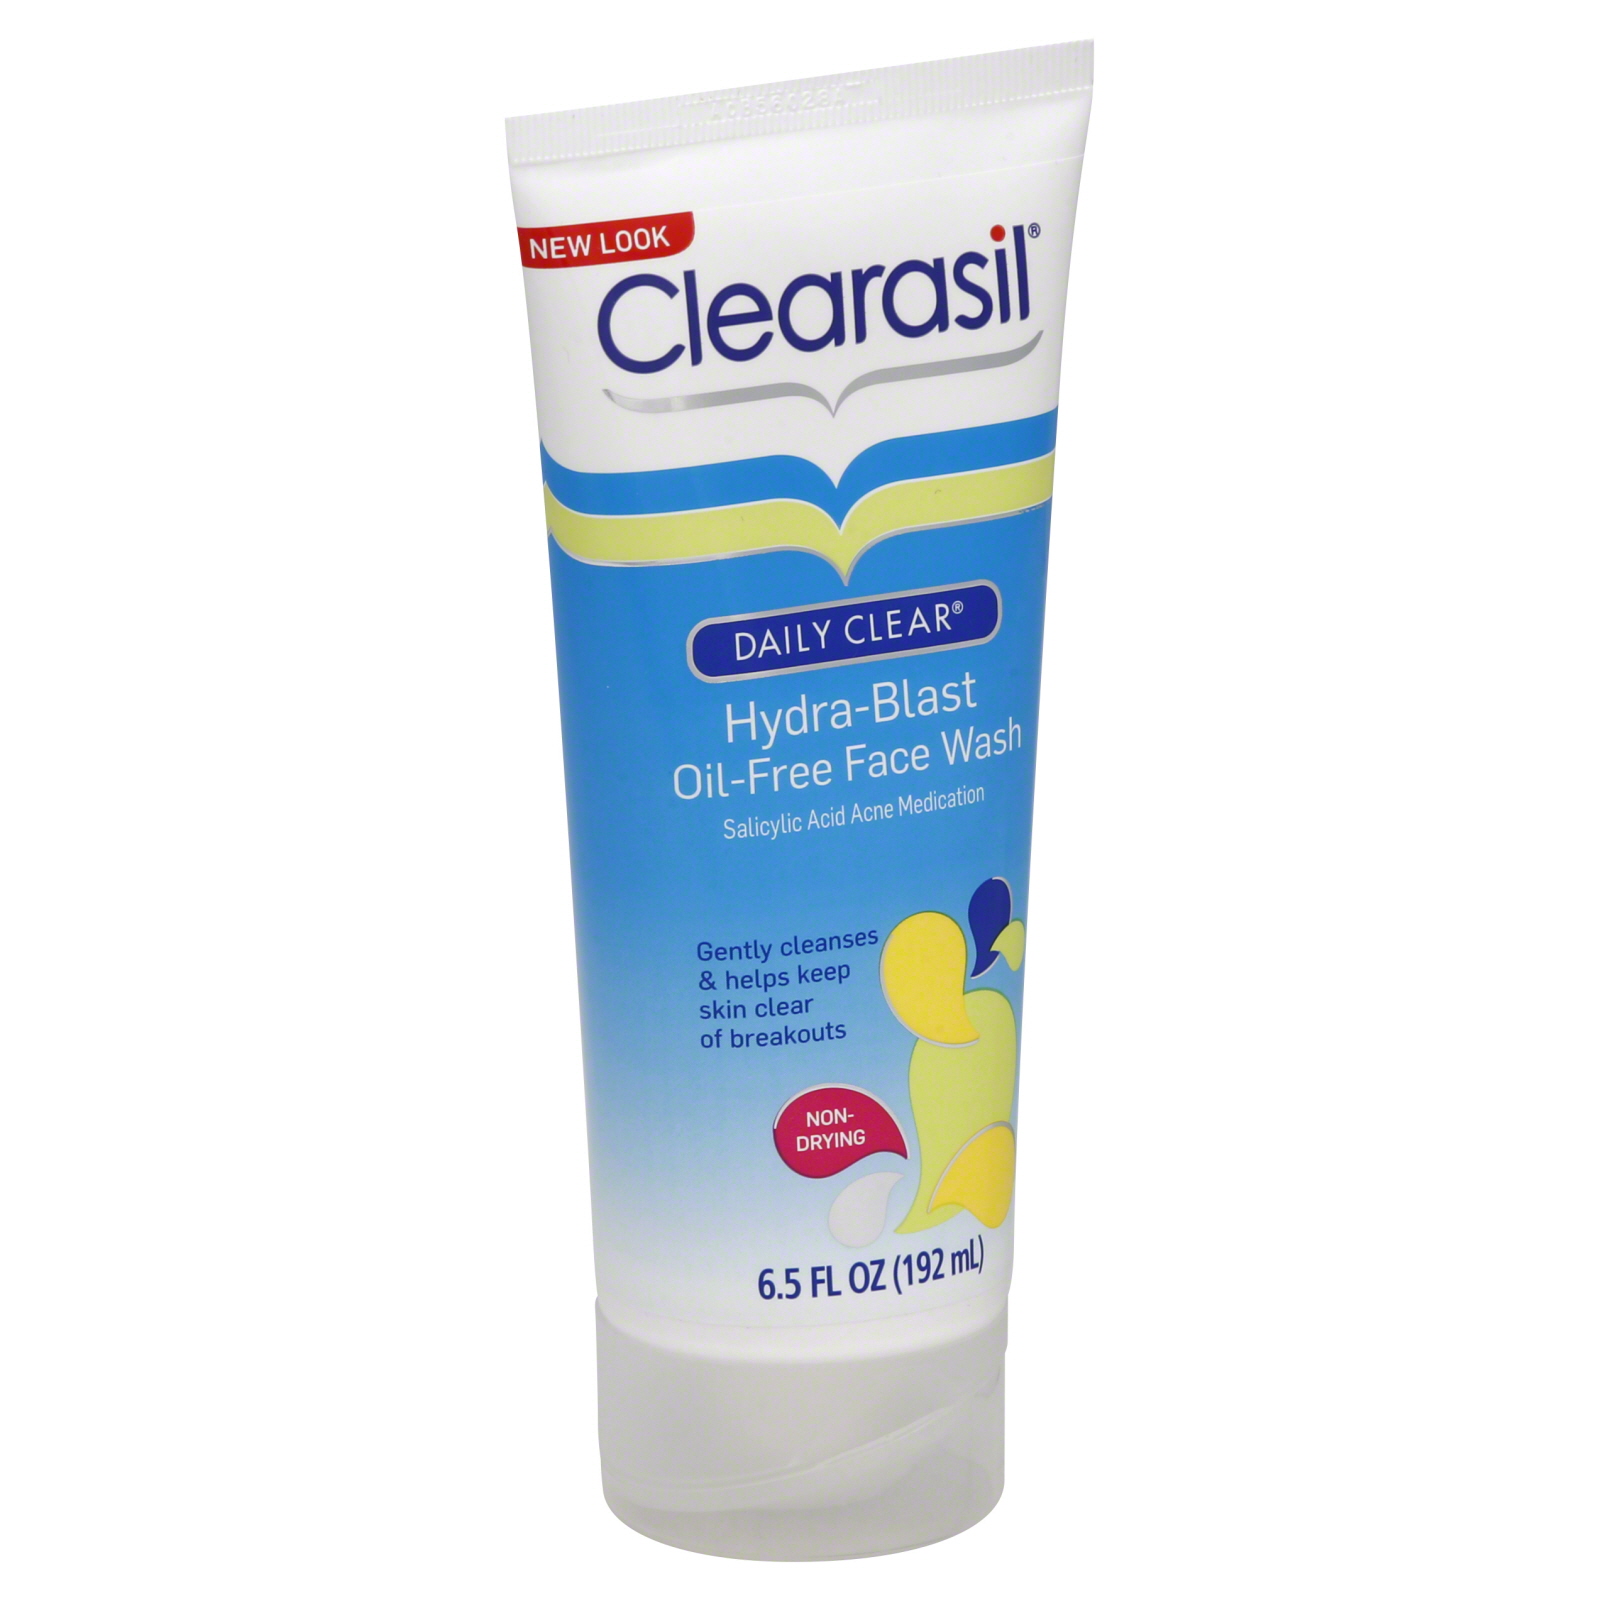 Clearasil Daily Clear, Face Wash, Oil Free, Hydra-Blast, 6.5 fl oz (192 ml)